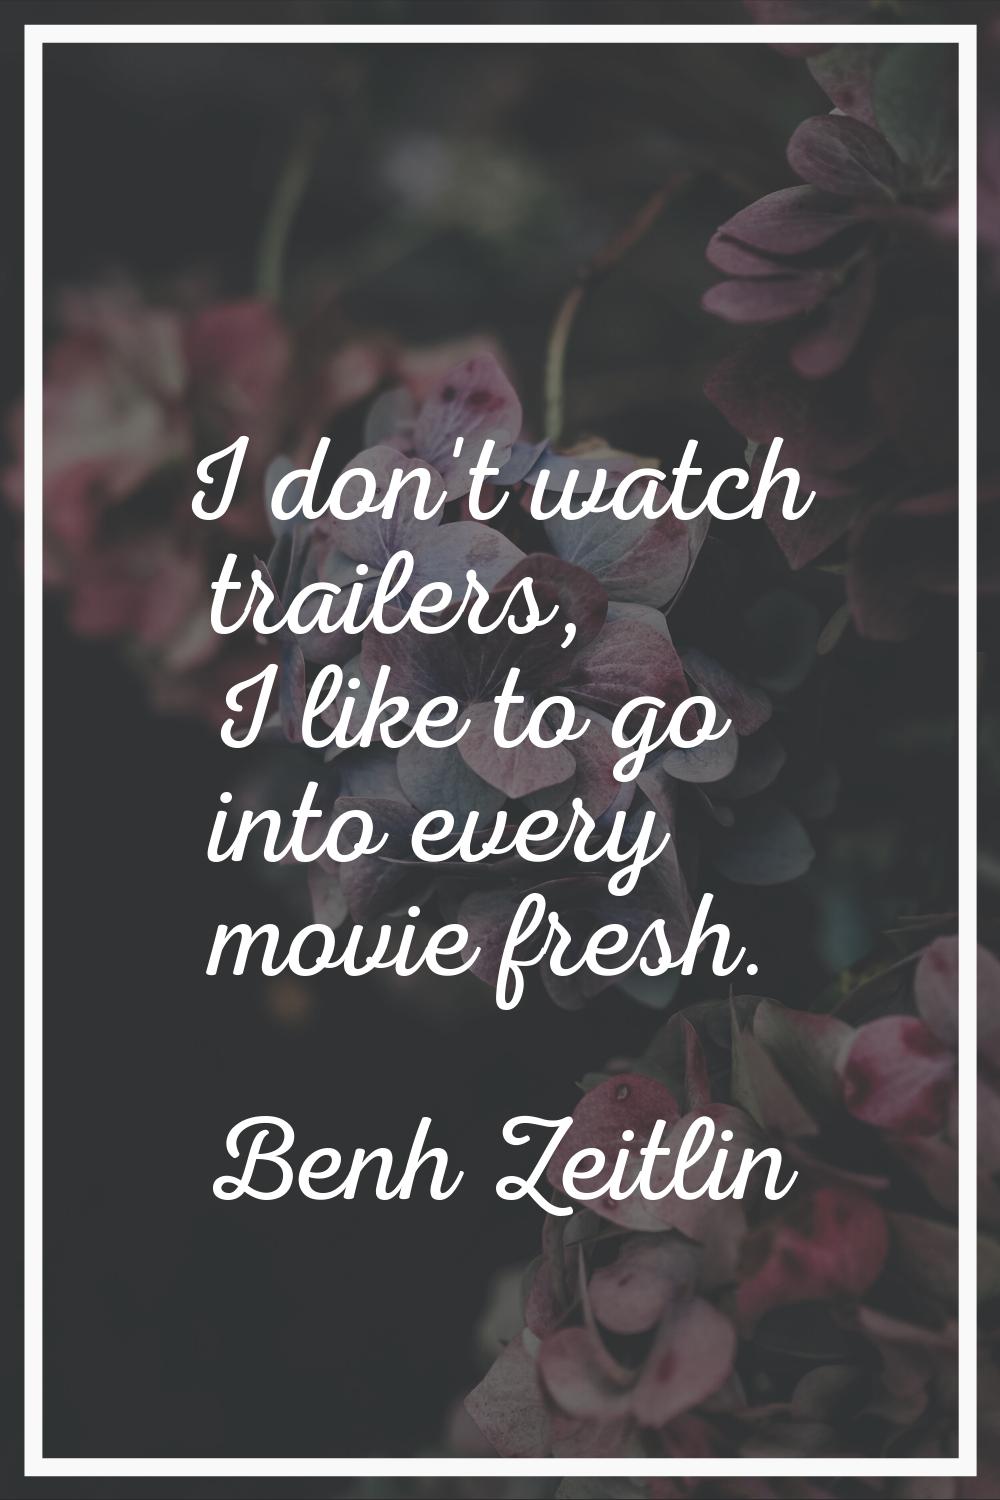 I don't watch trailers, I like to go into every movie fresh.